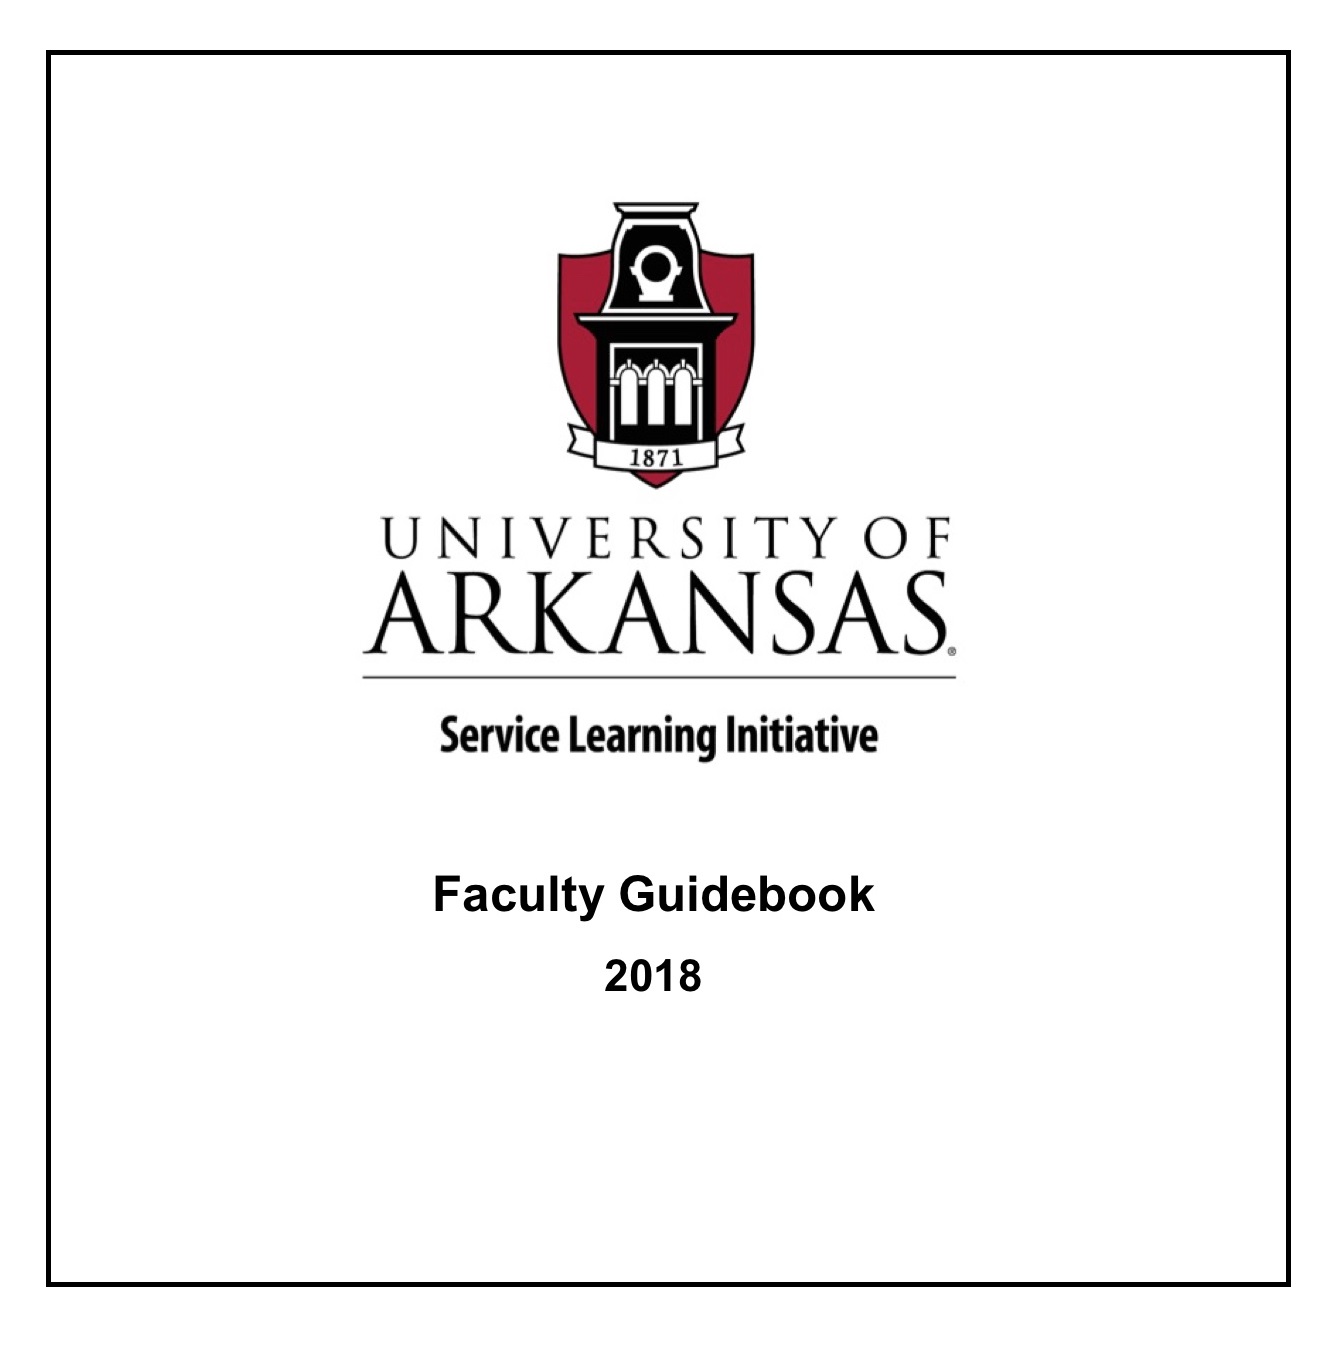 Faculty Guidebook